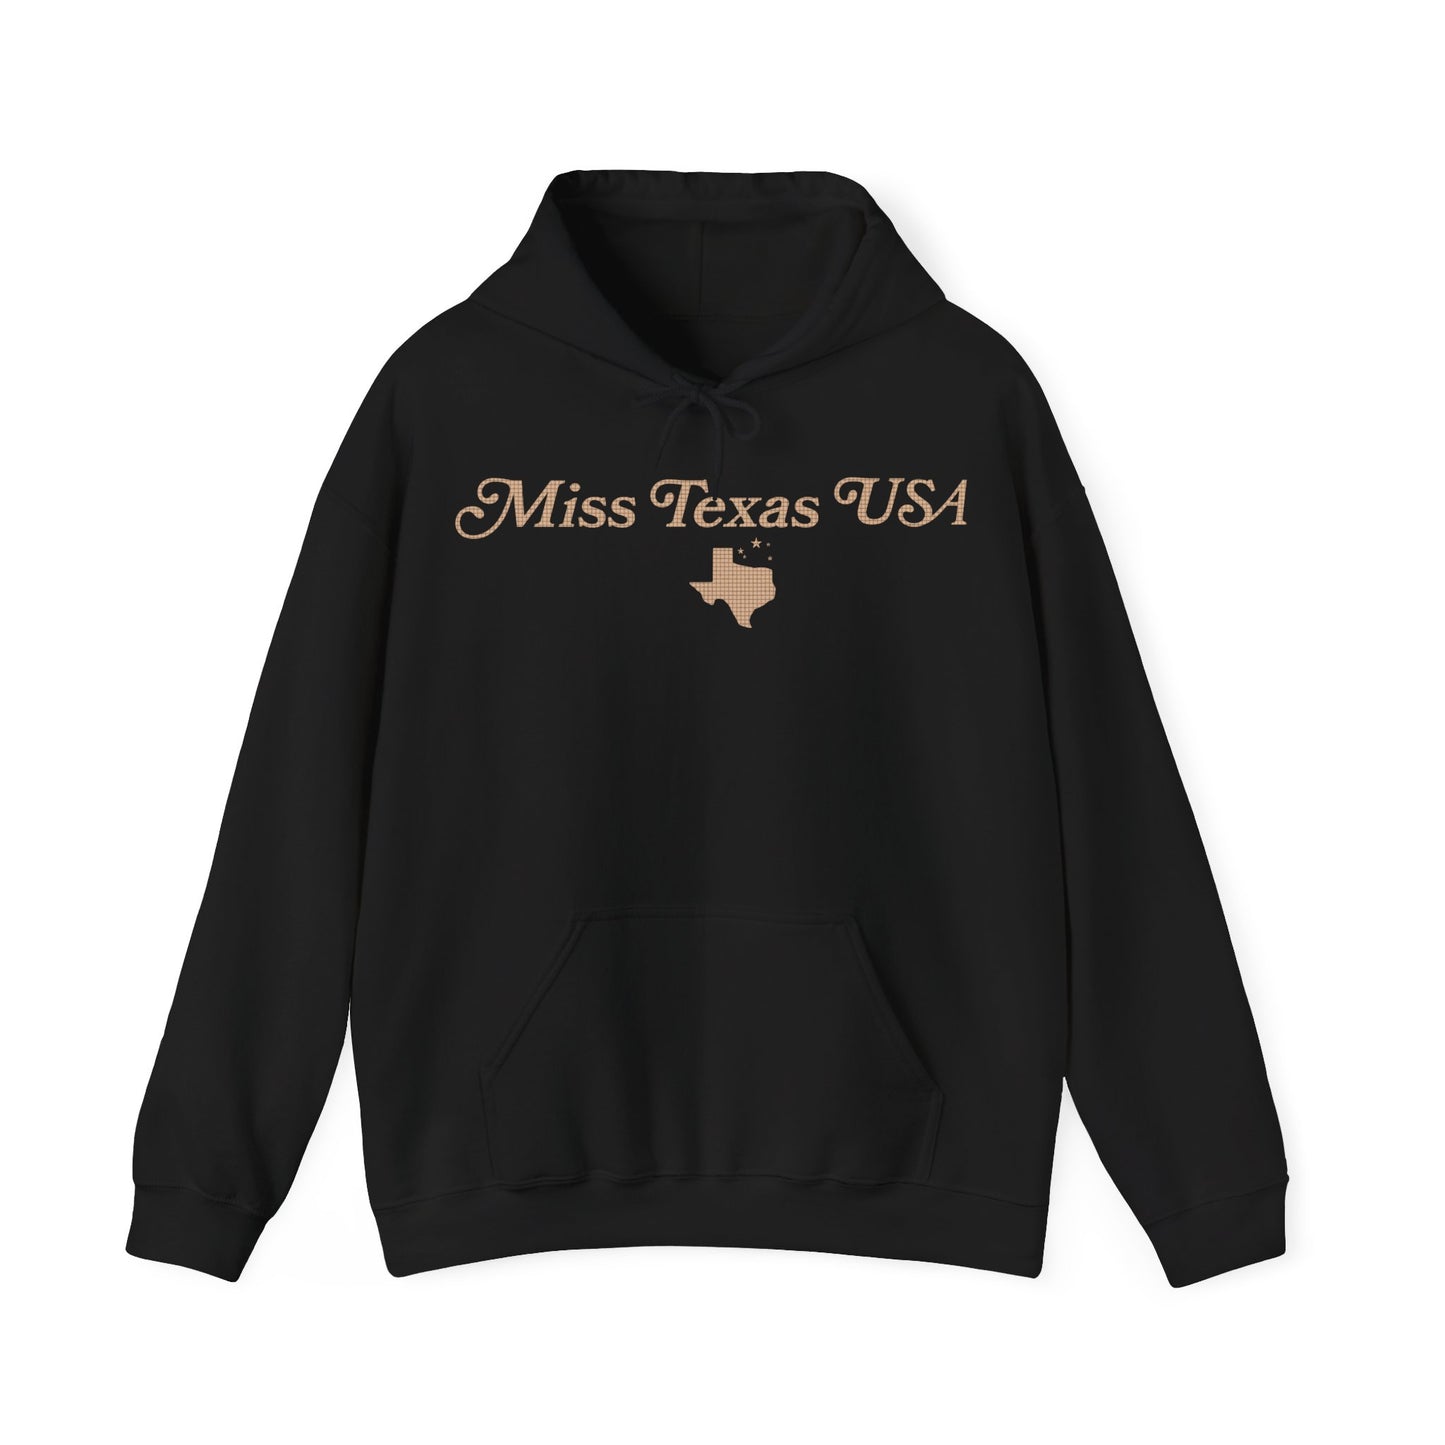 "Texas with Stars" Hoodie - Miss Texas USA